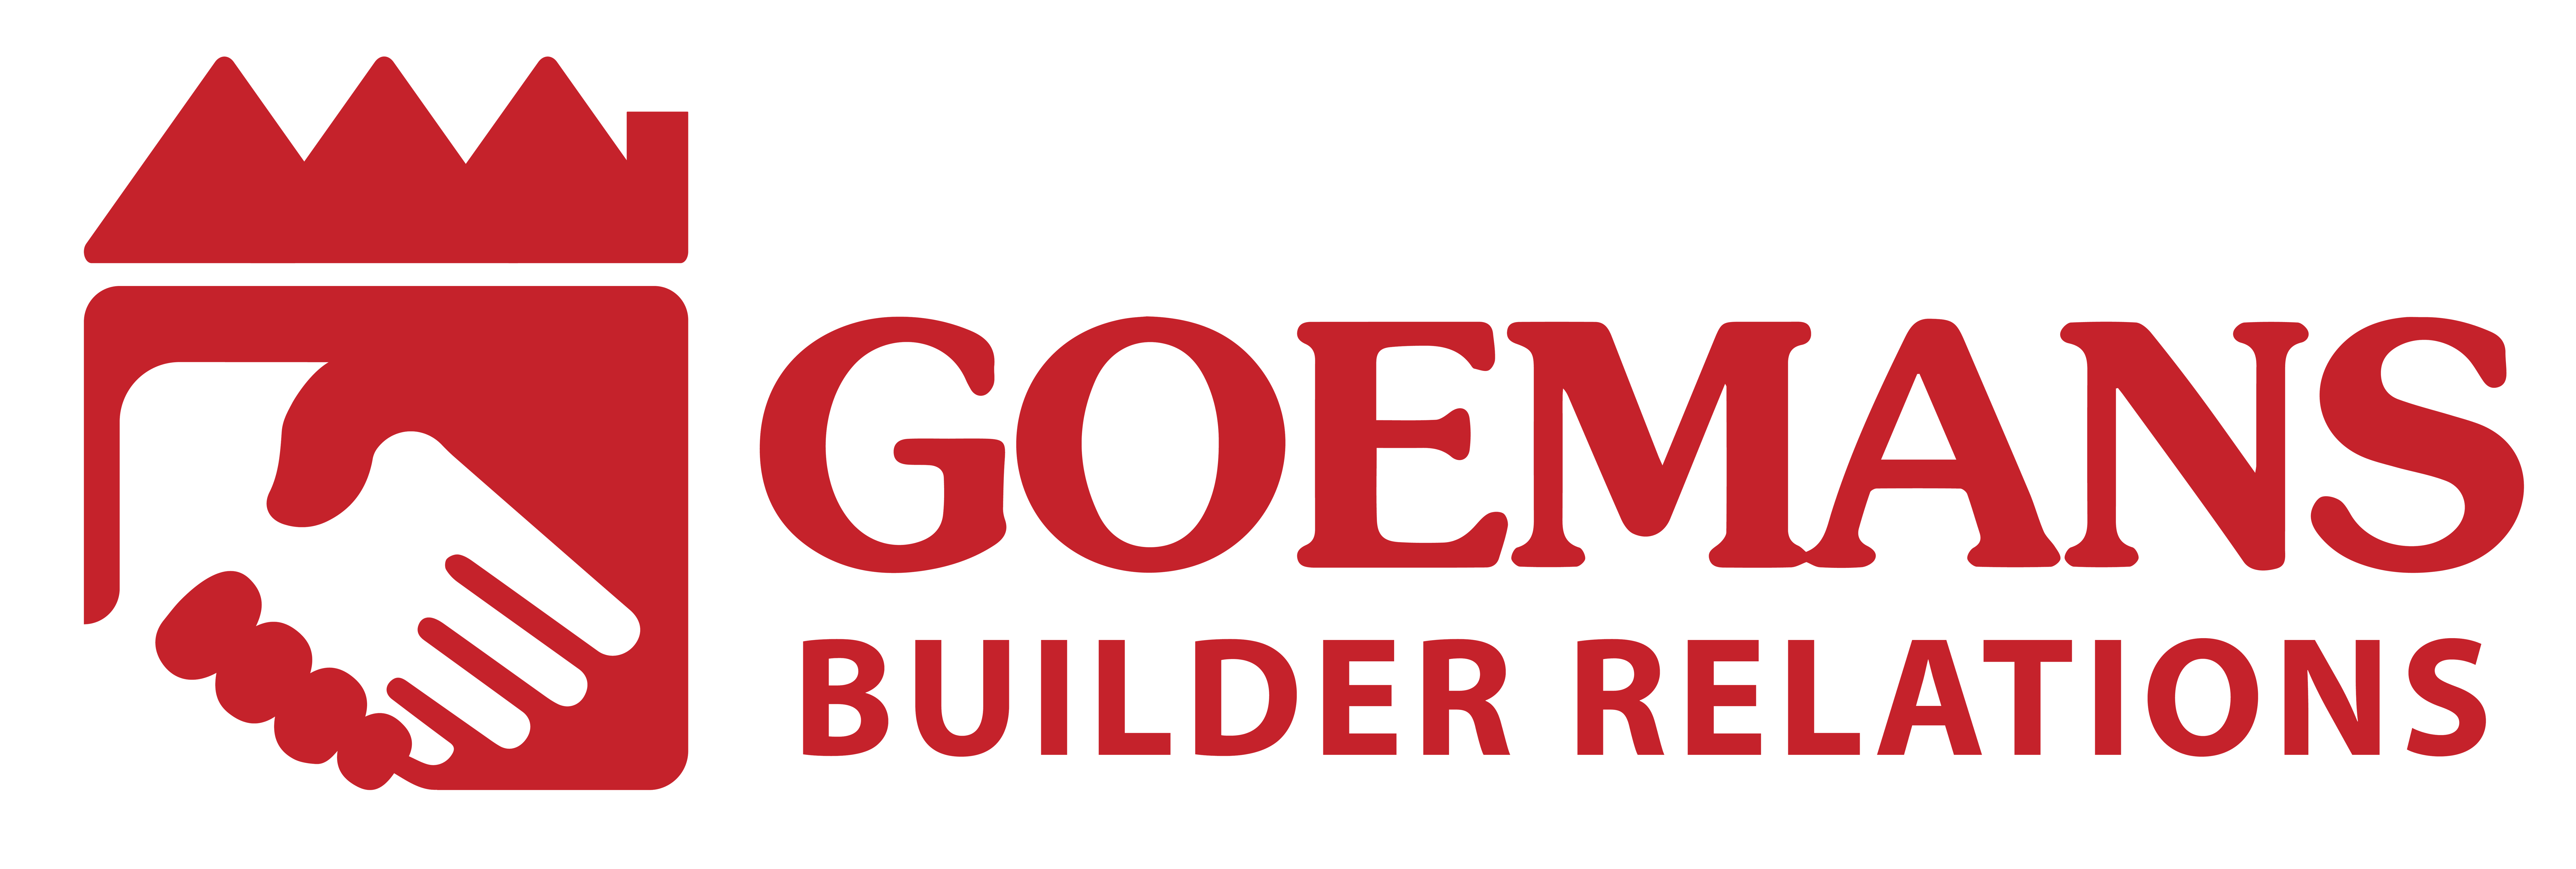 GOEMANS_BUILDER-RELATIONS_BRAND_2021_BRAND